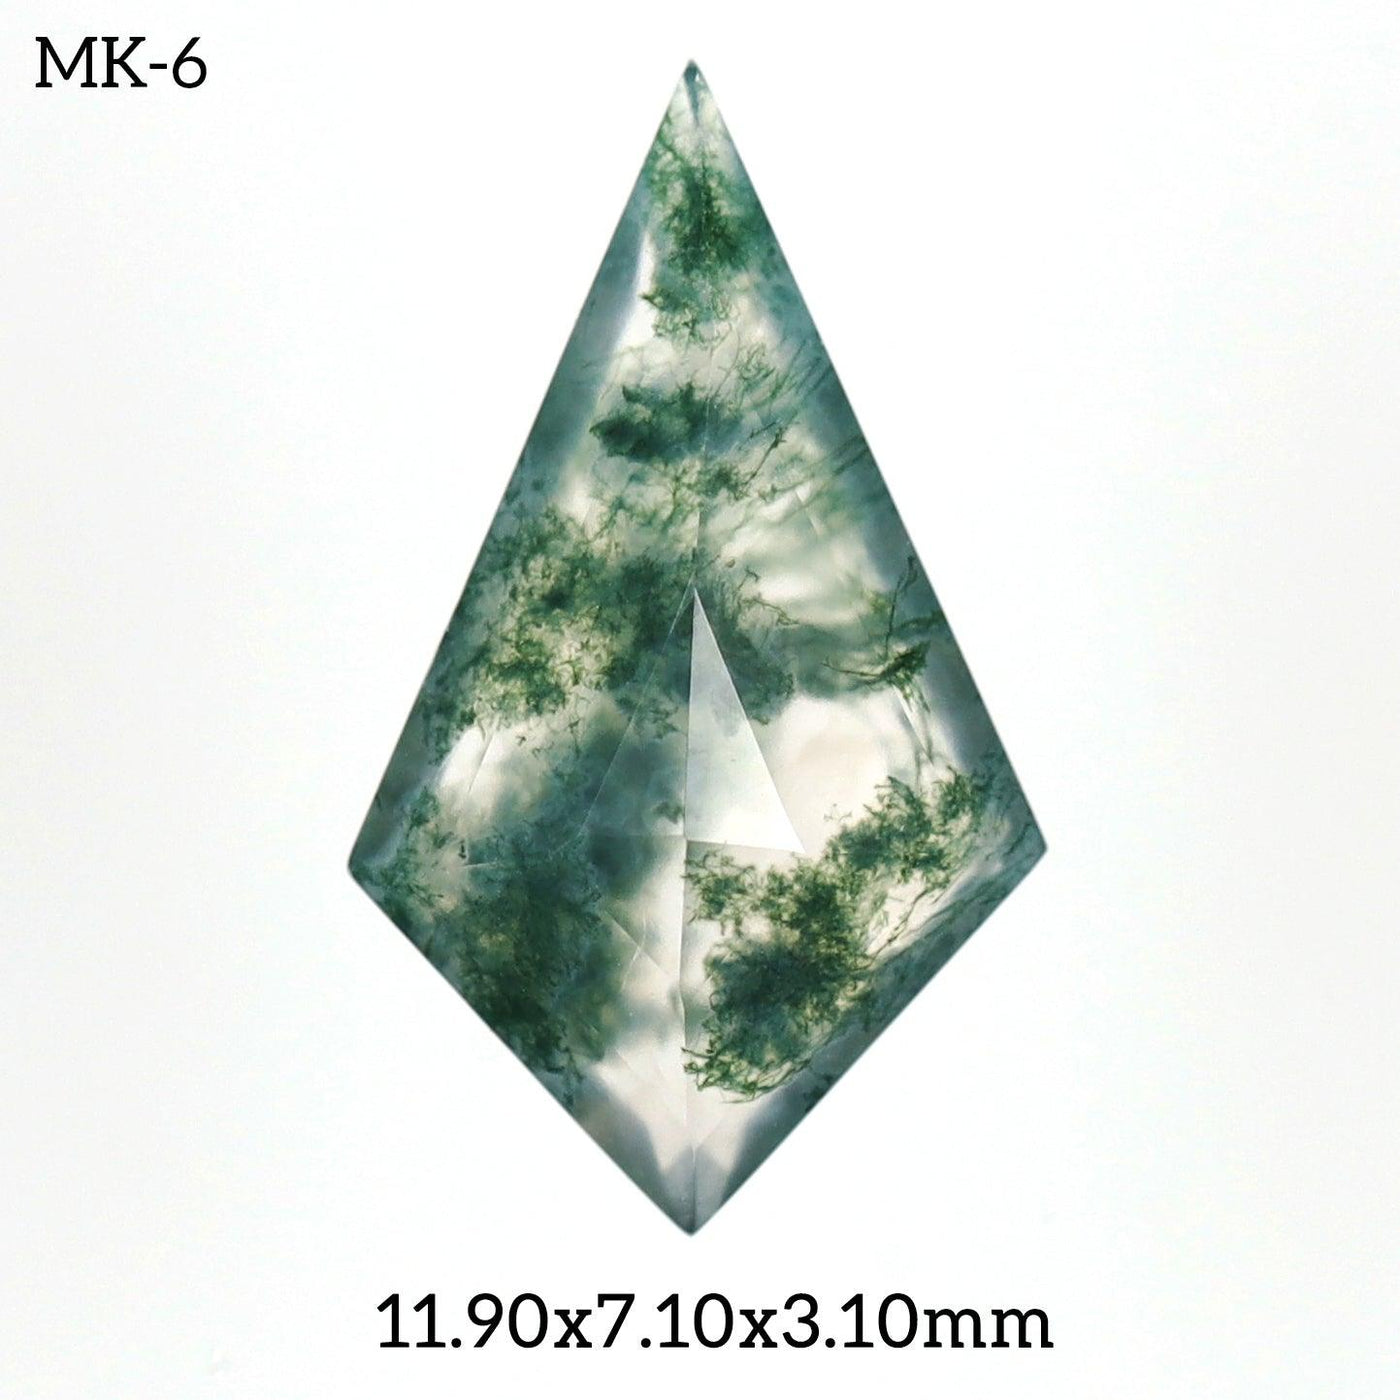 MK - 6 Moss Agate Kite Gemstone